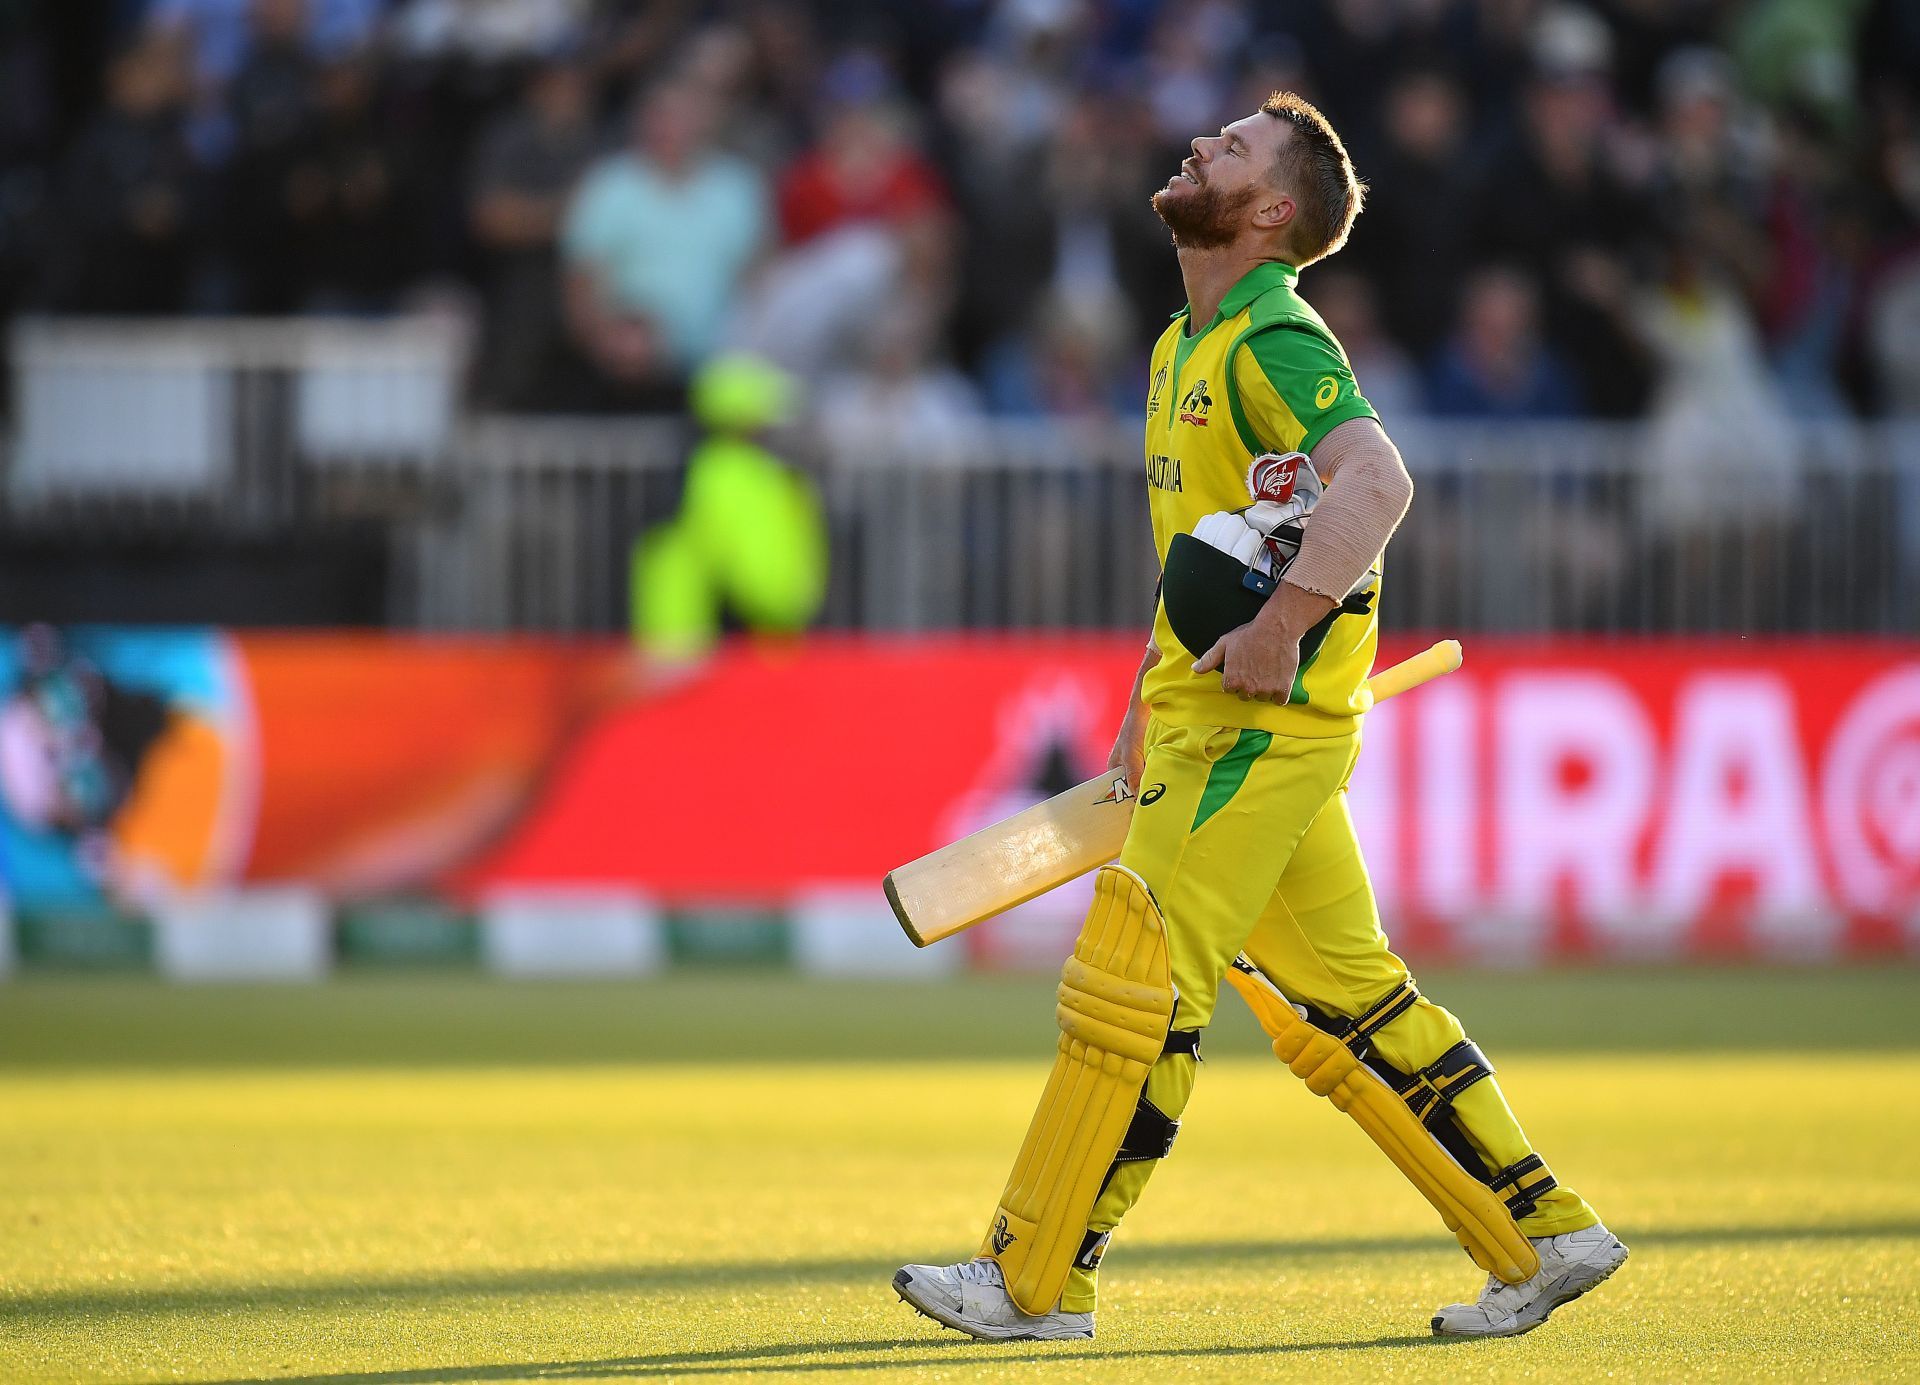 David Warner in action, Australia v South Africa - ICC Cricket World Cup 2019